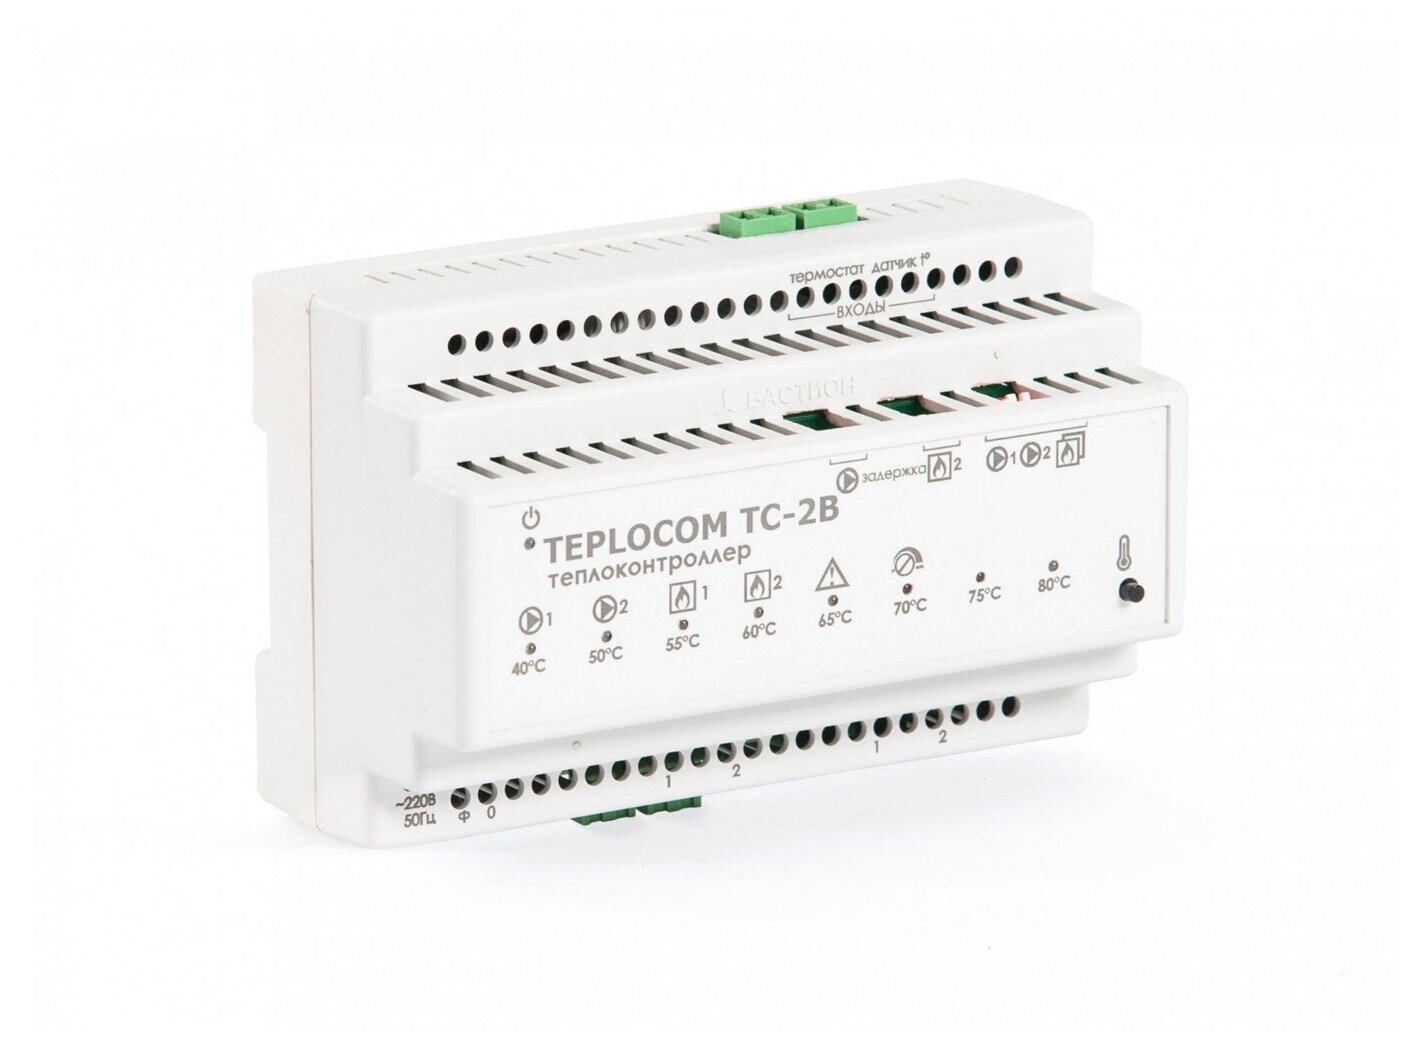 Теплоконтроллер для каскада котлов TEPLOCOM Каскад TC-2B - фотография № 1